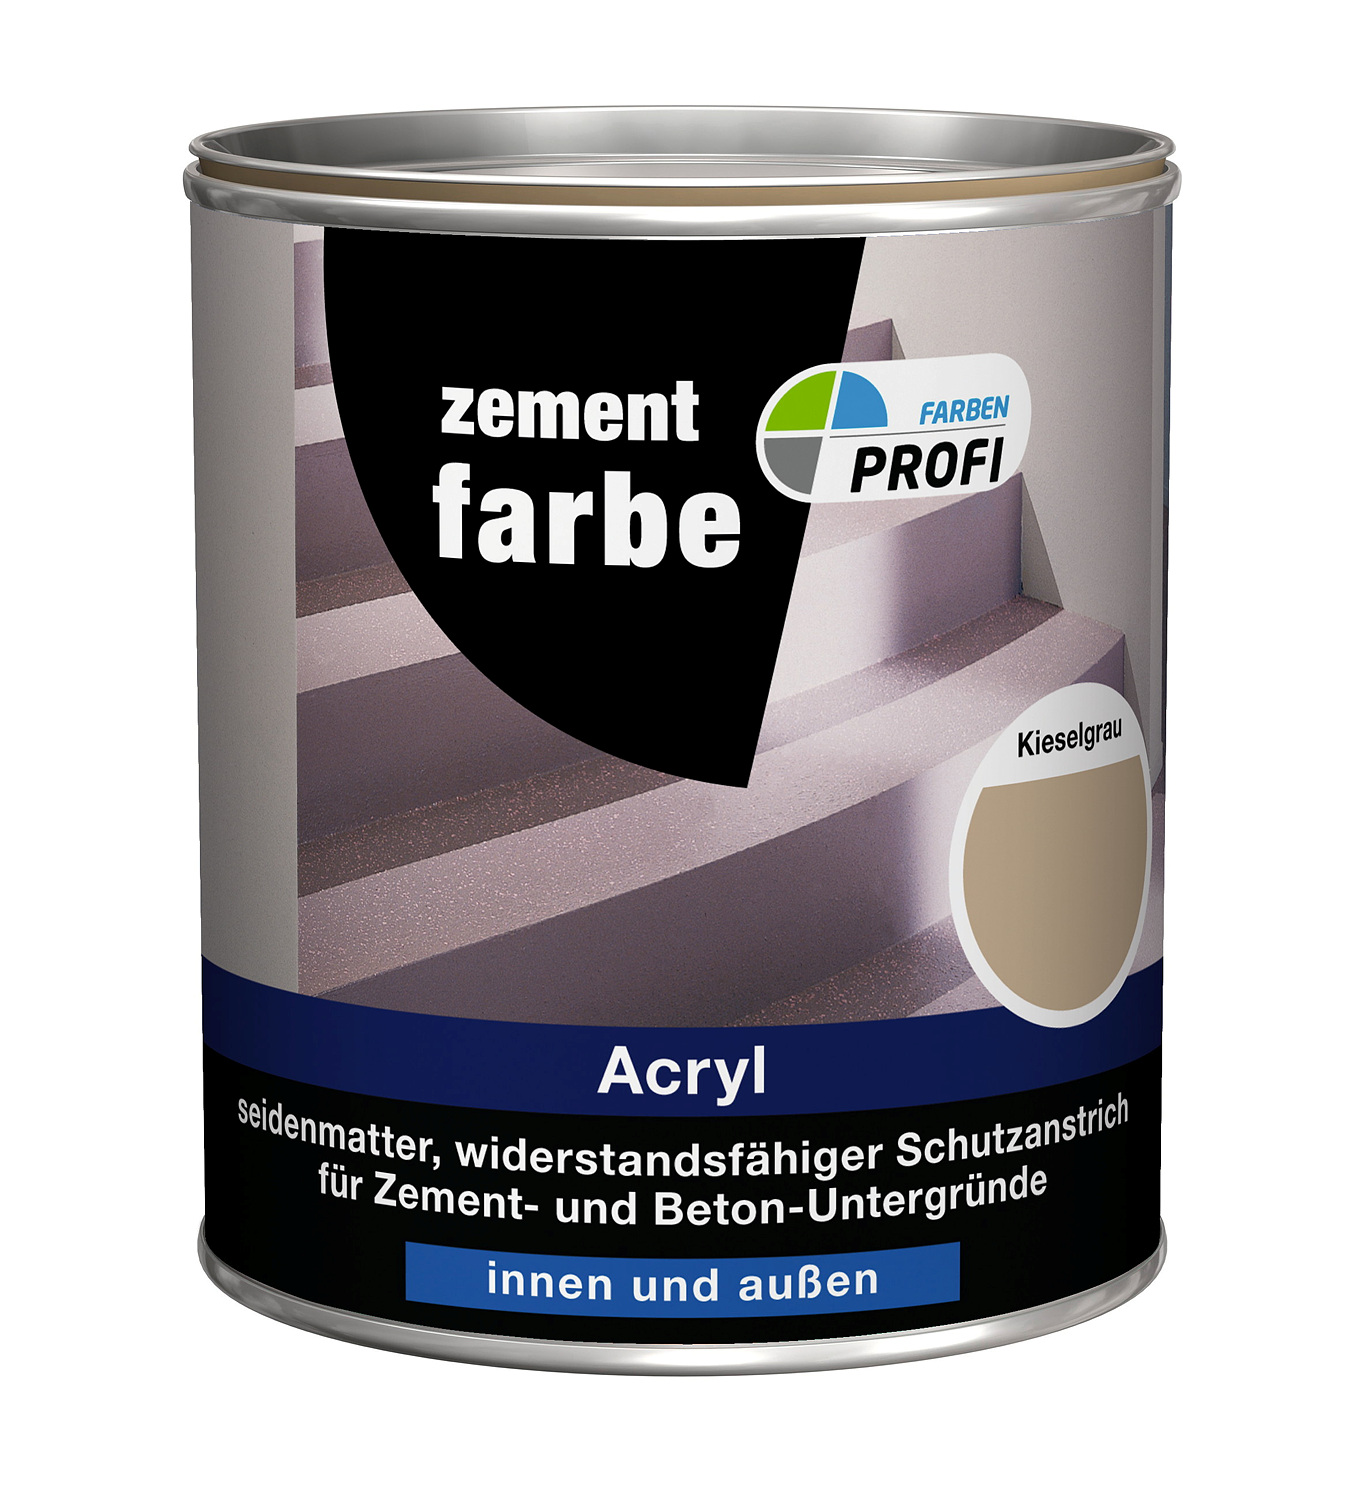 PROFI Acryl Zementfarbe Kieselgrau 2,5 L, seidenmatt